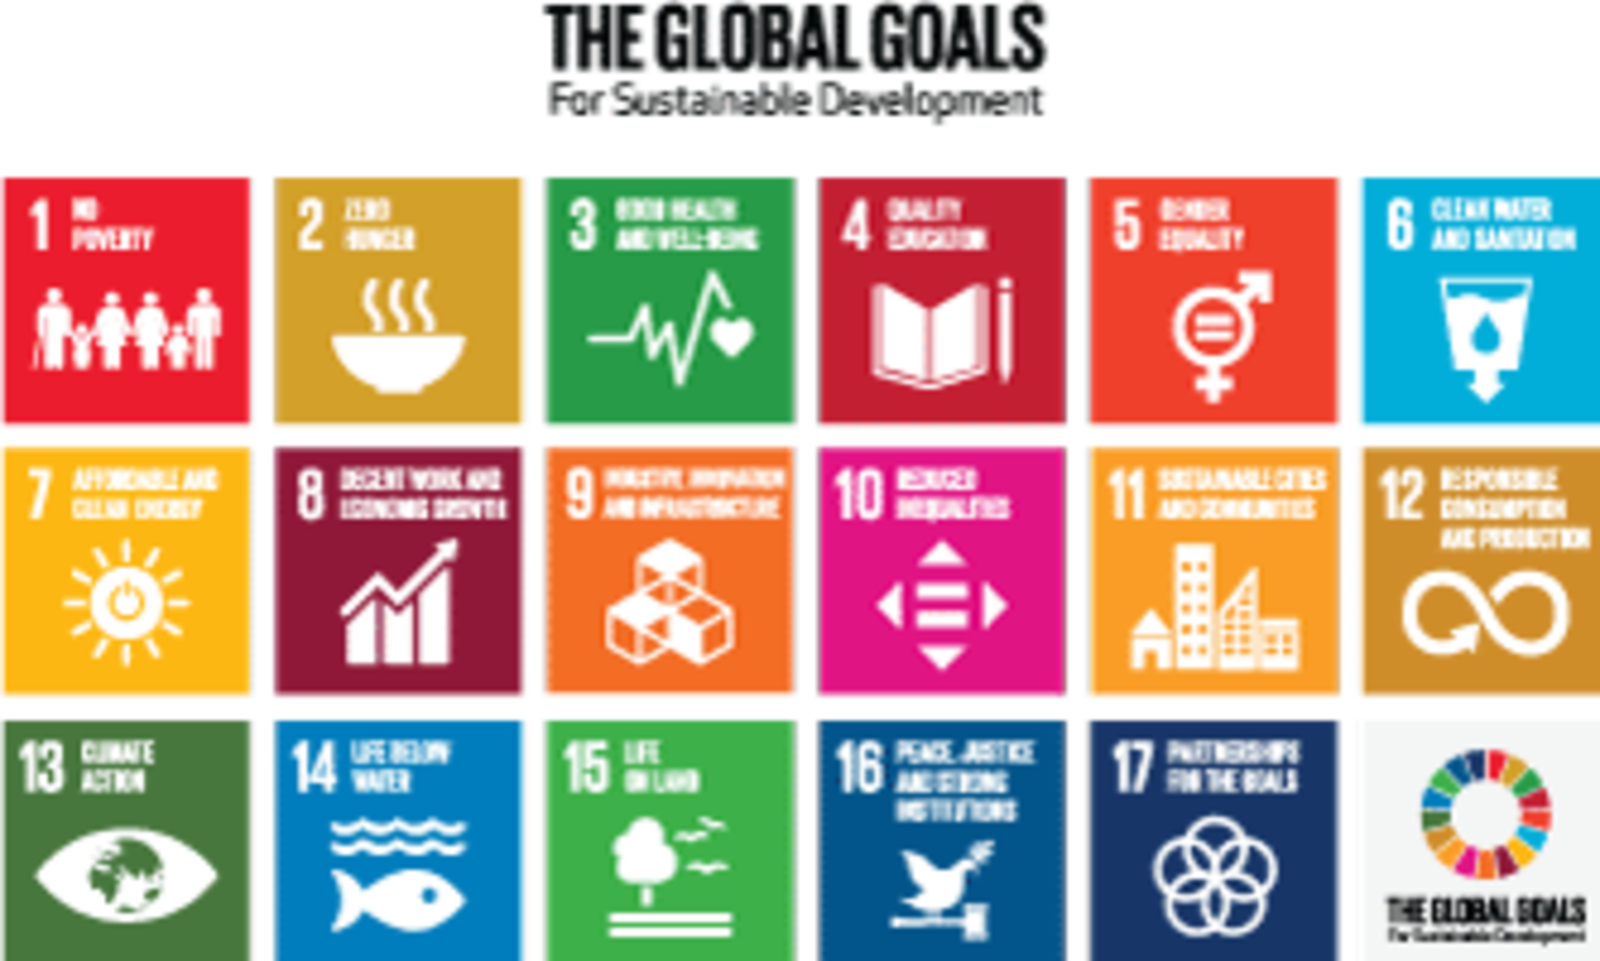 the 17 sustainable development goals